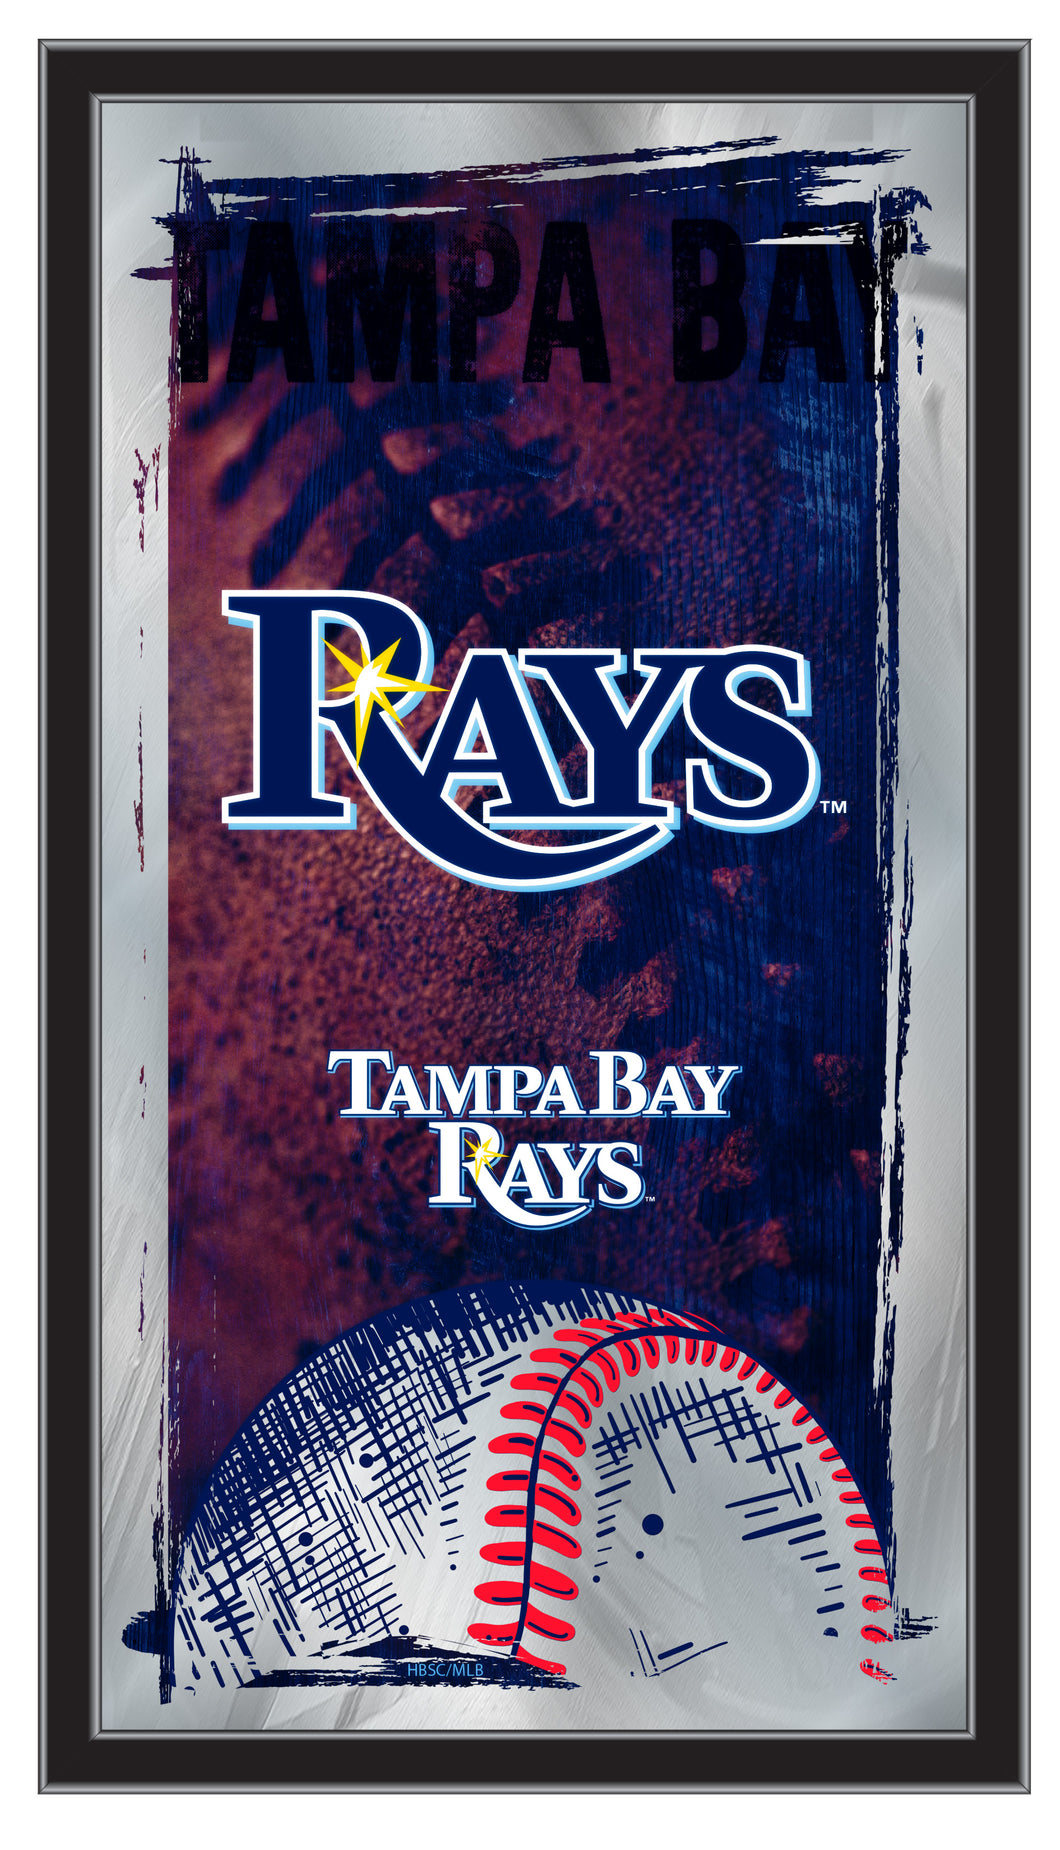 Fanmats Tampa Bay Devil Rays Baseball Mat - Retro Collection